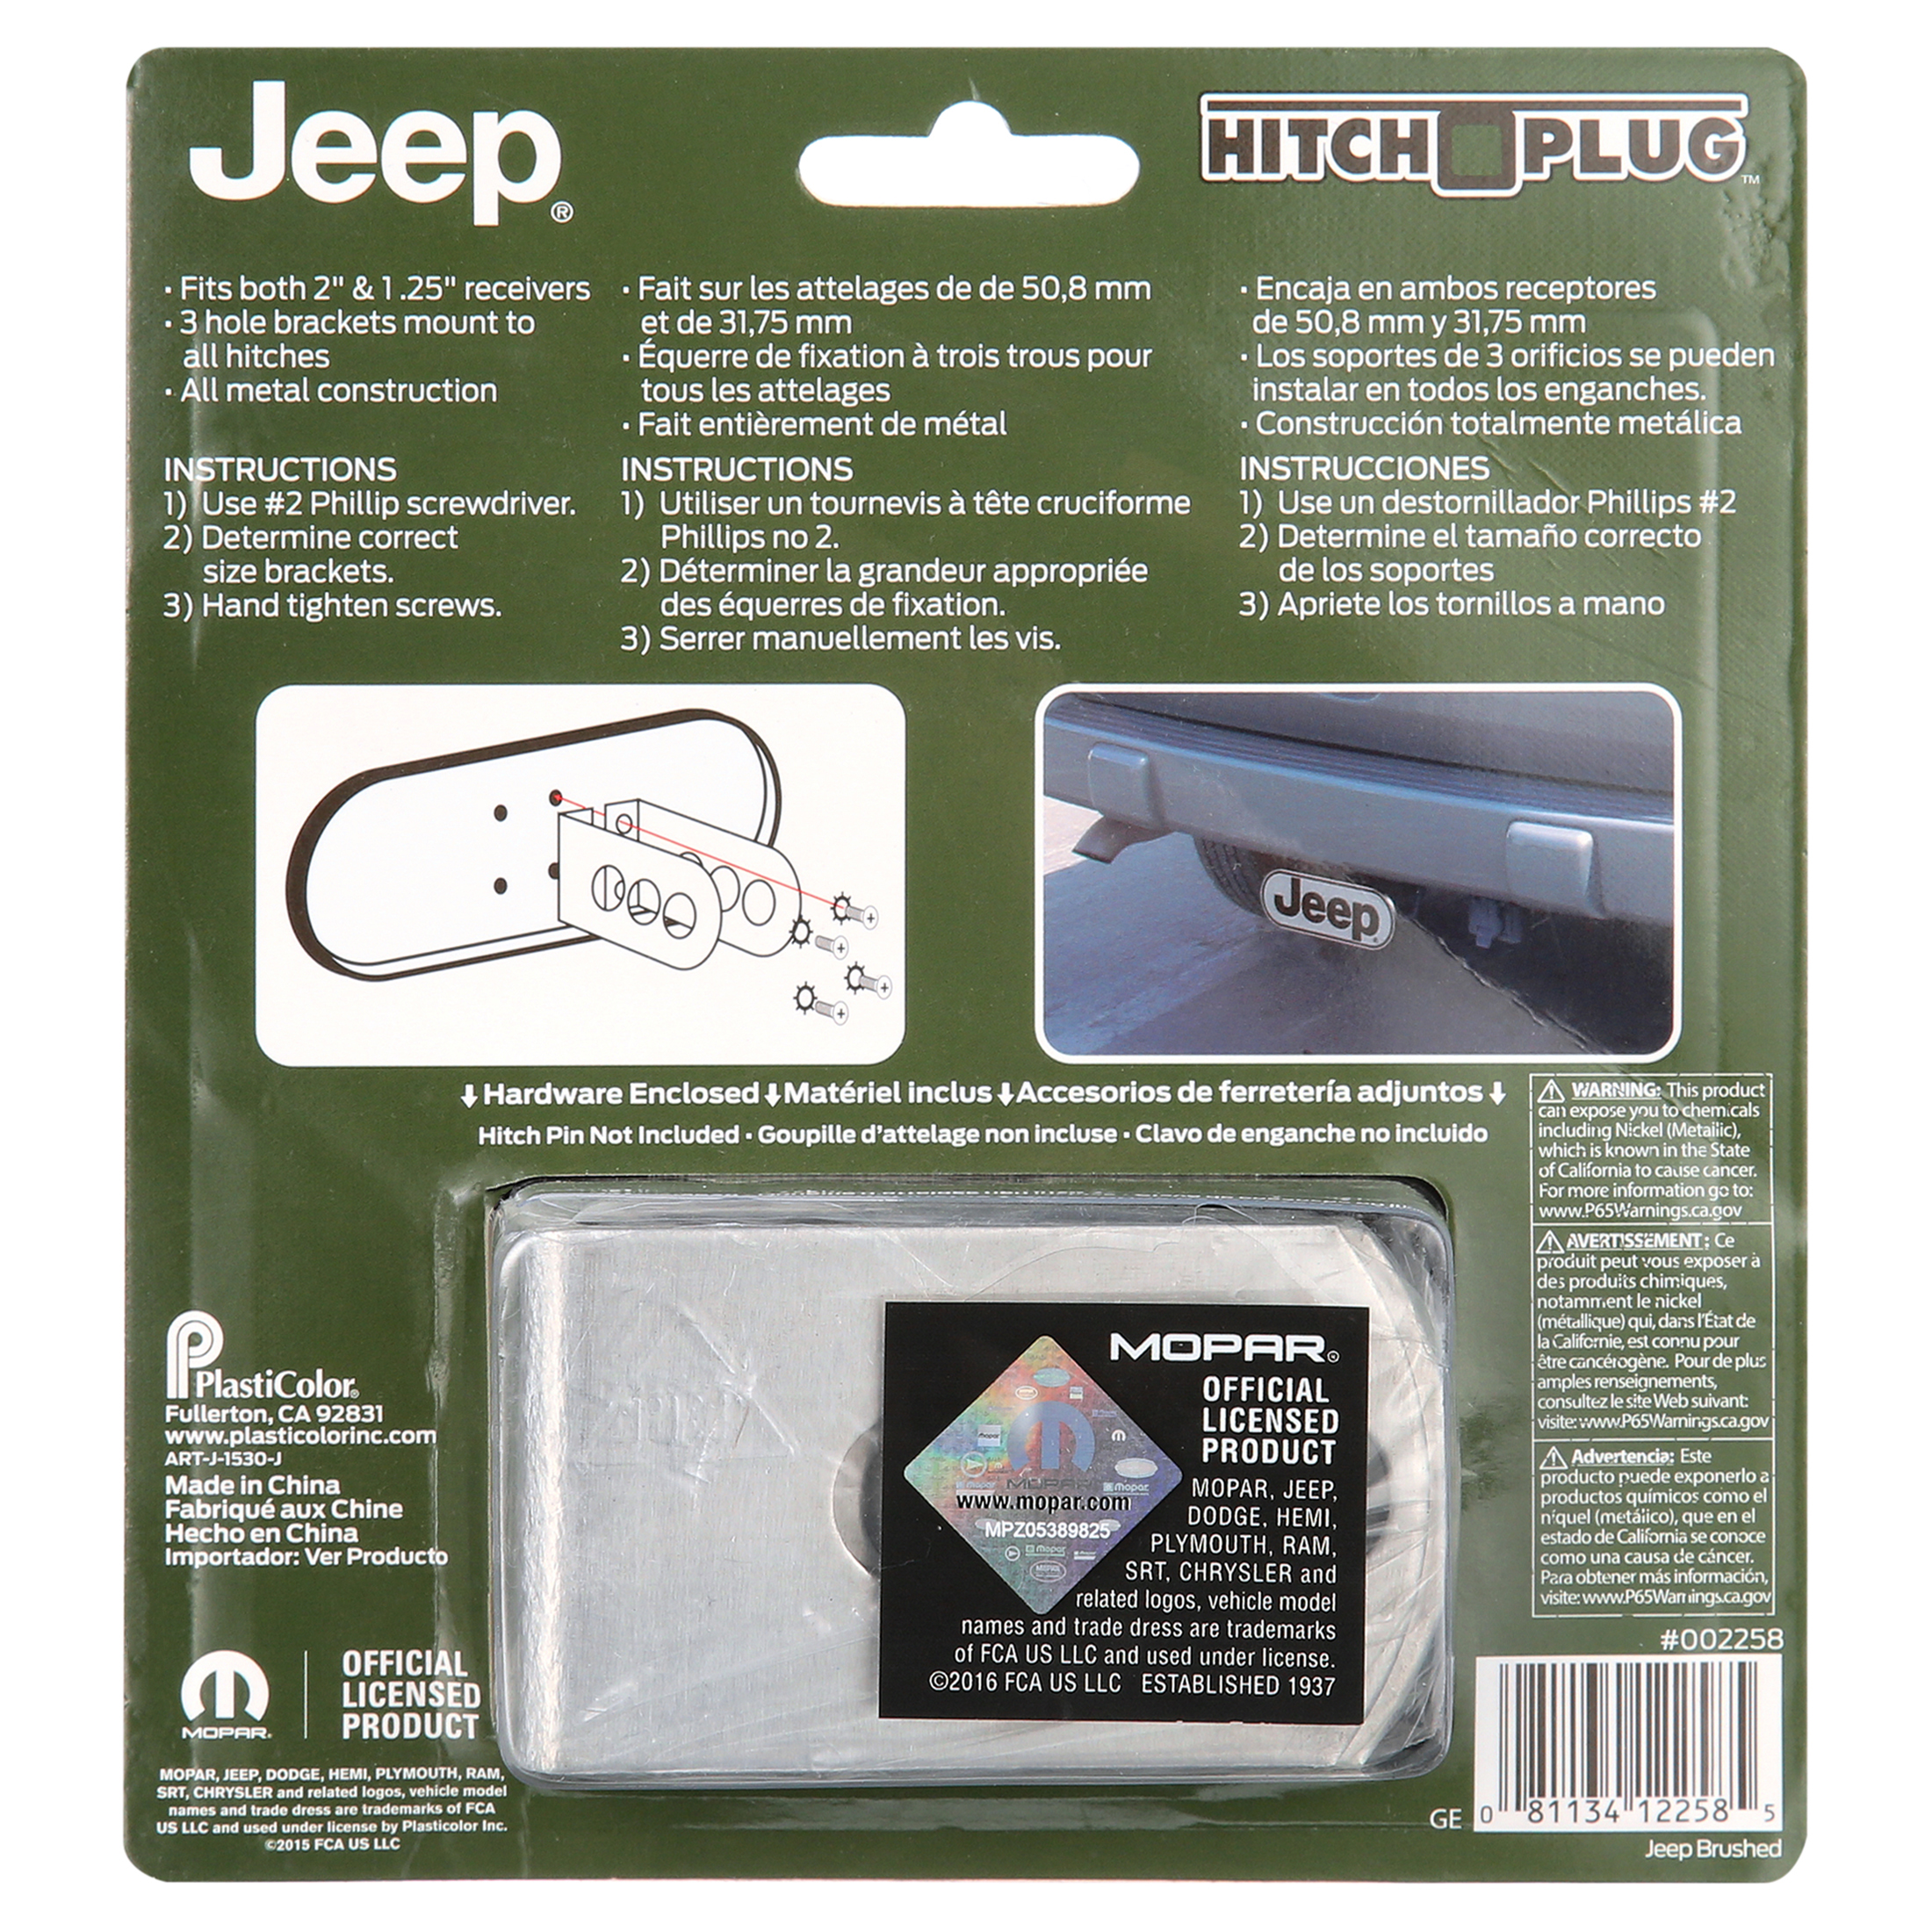 Plasticolor Jeep Hitch Cover - image 2 of 5